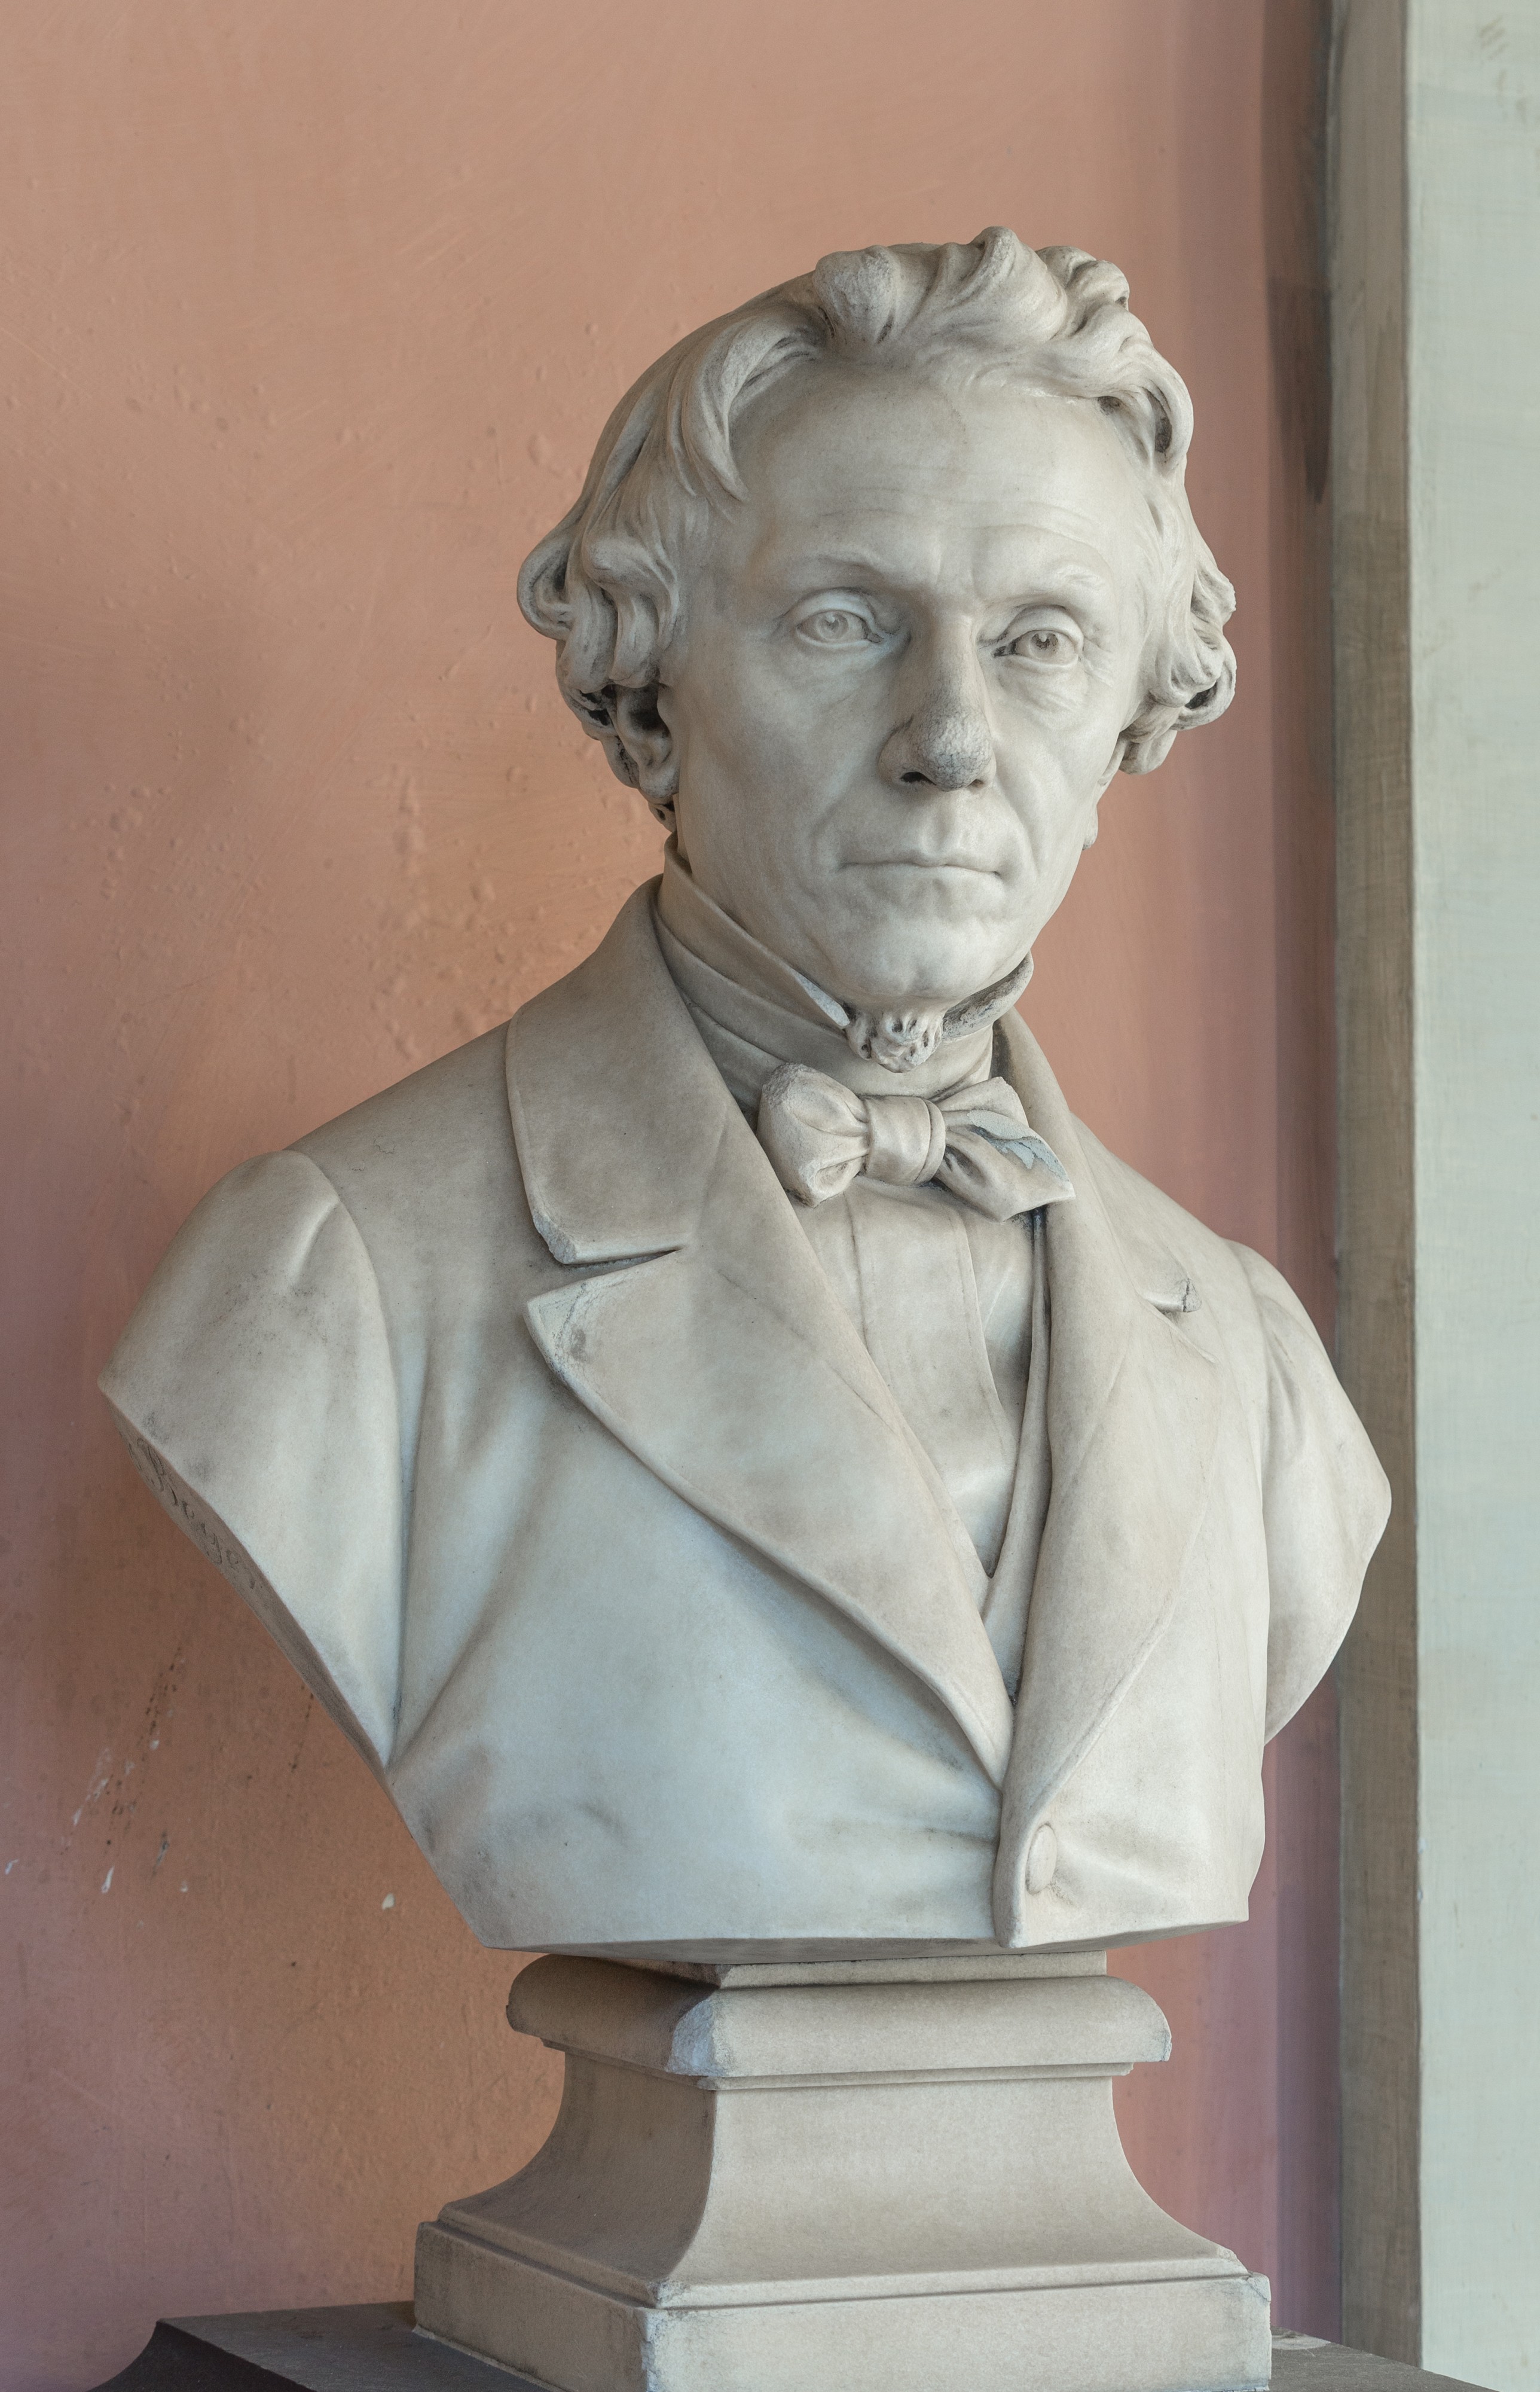 Franz Schuh (1865-1935), Nr. 115, bust (marble) in the Arkadenhof of the University of Vienna-2994